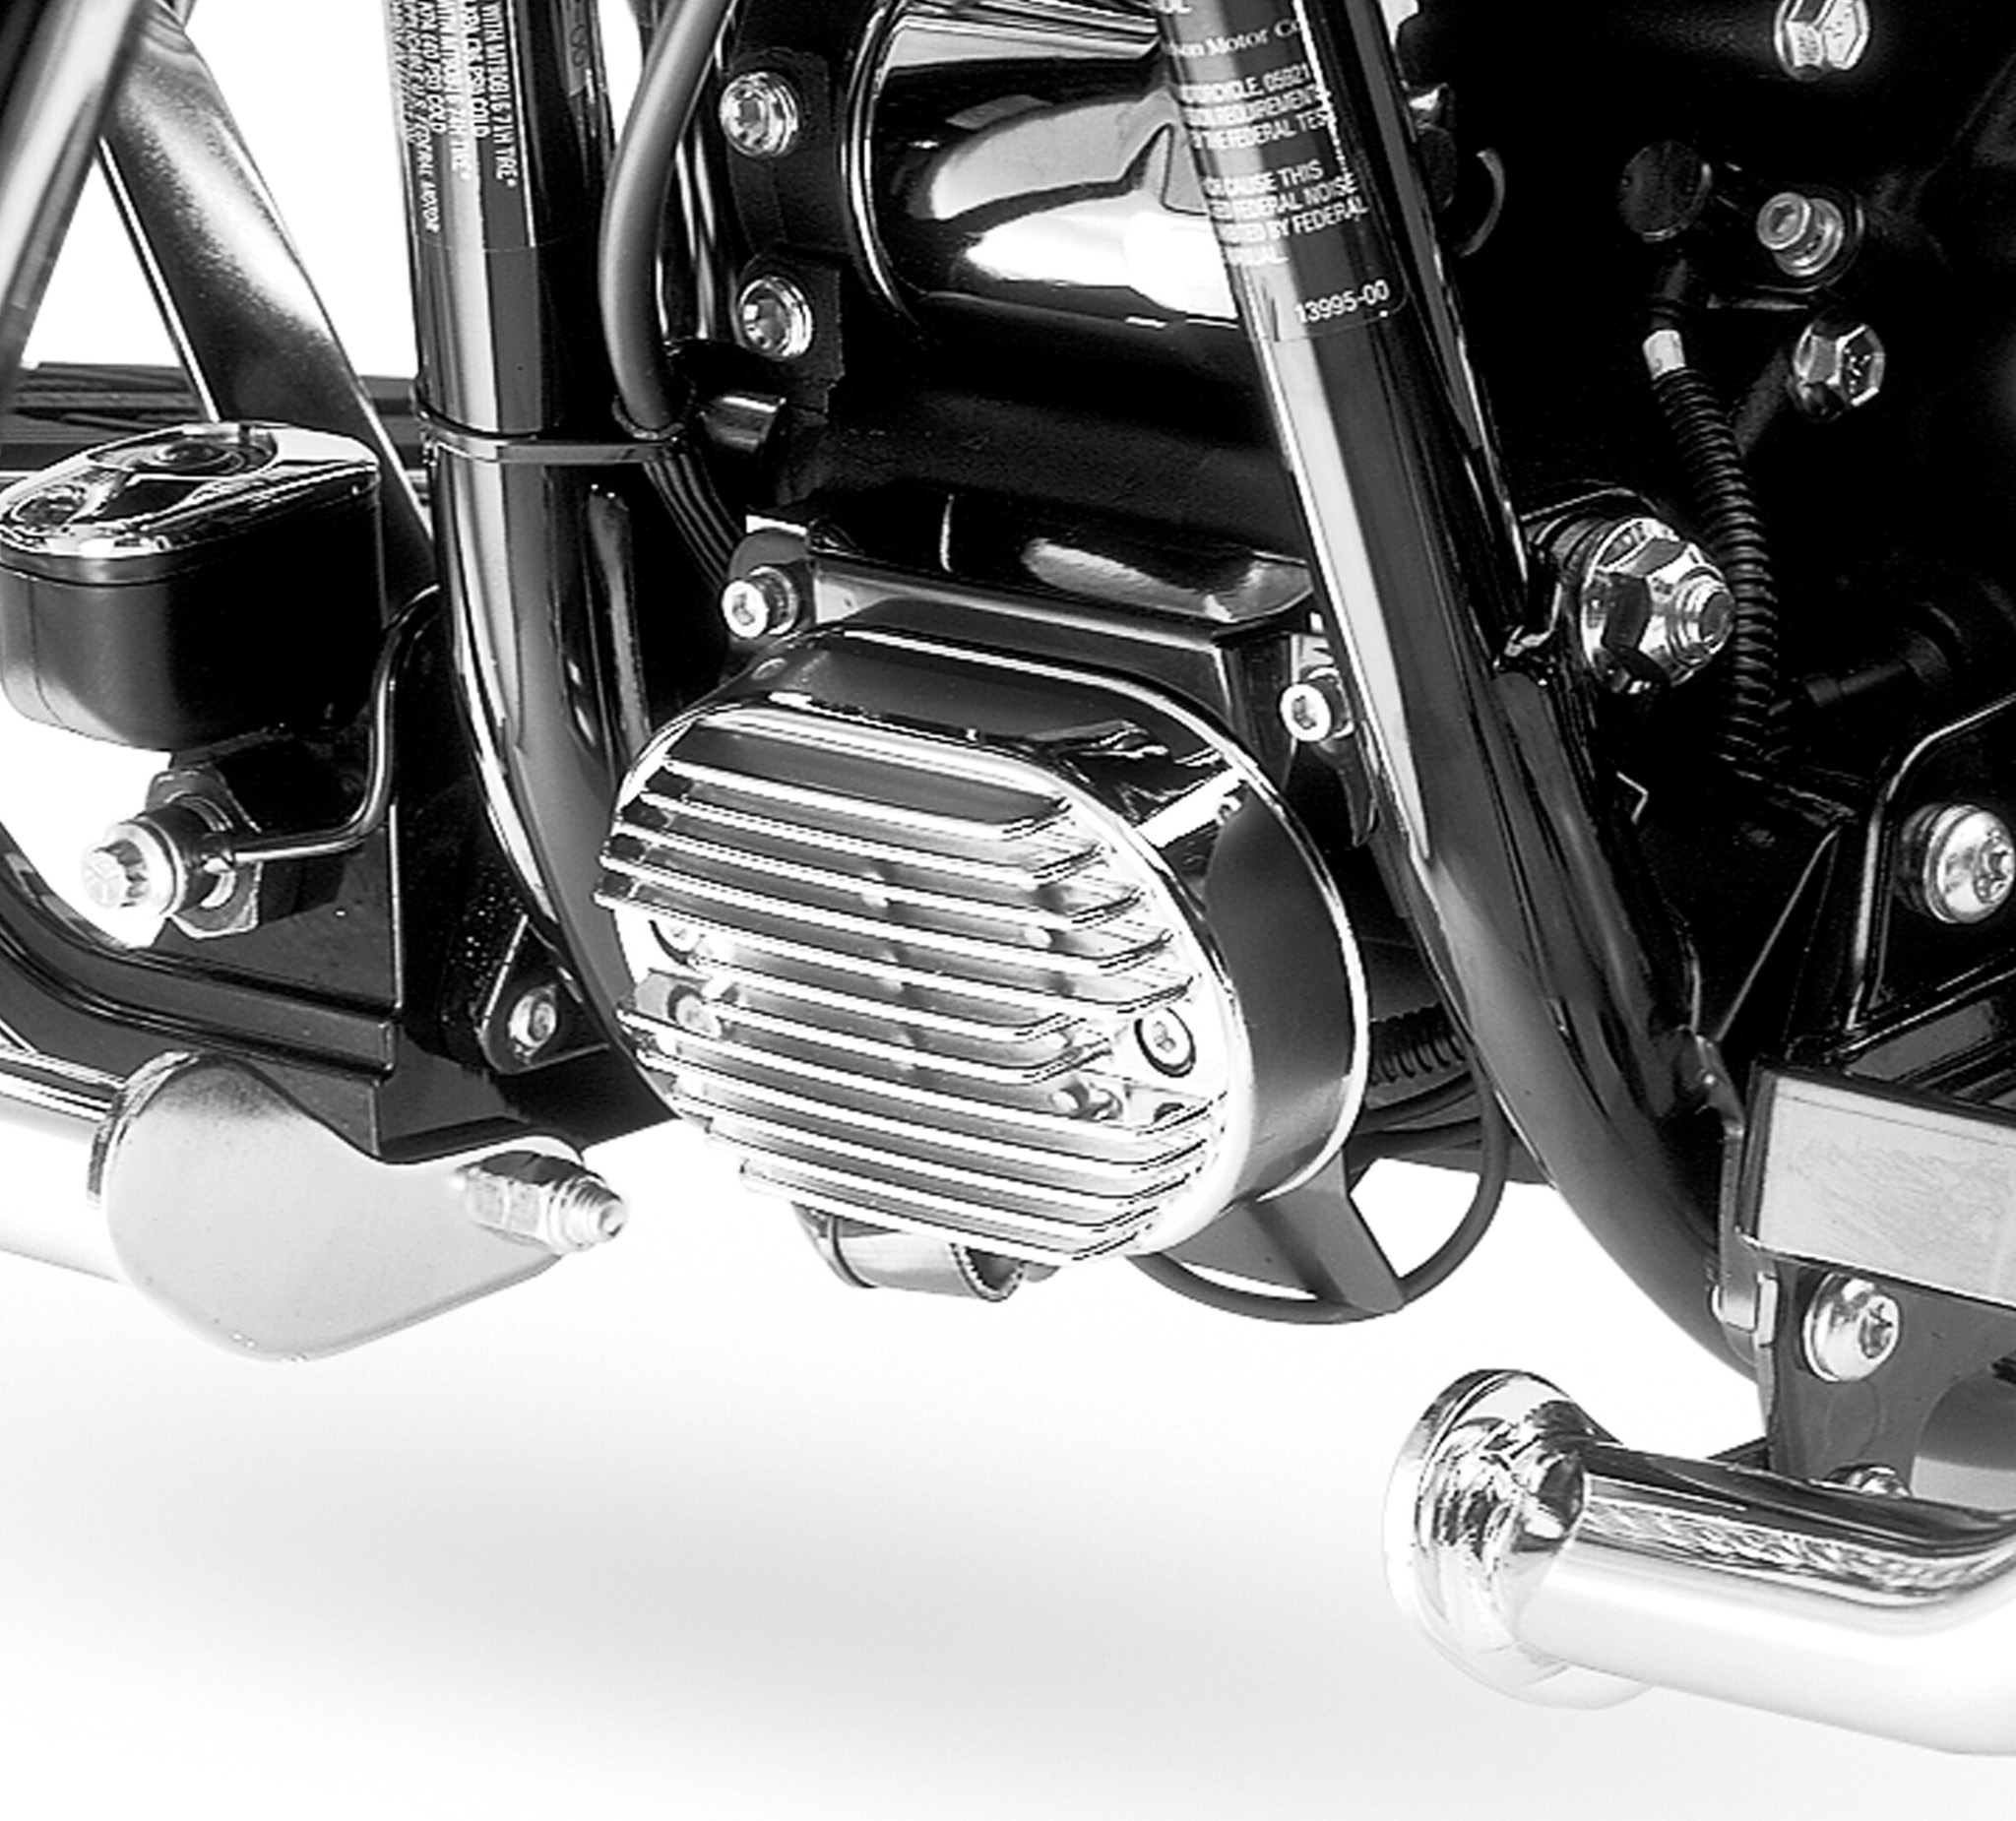 Drag Specialties Black Solid State Voltage Regulator for Harley Touring 17-19 